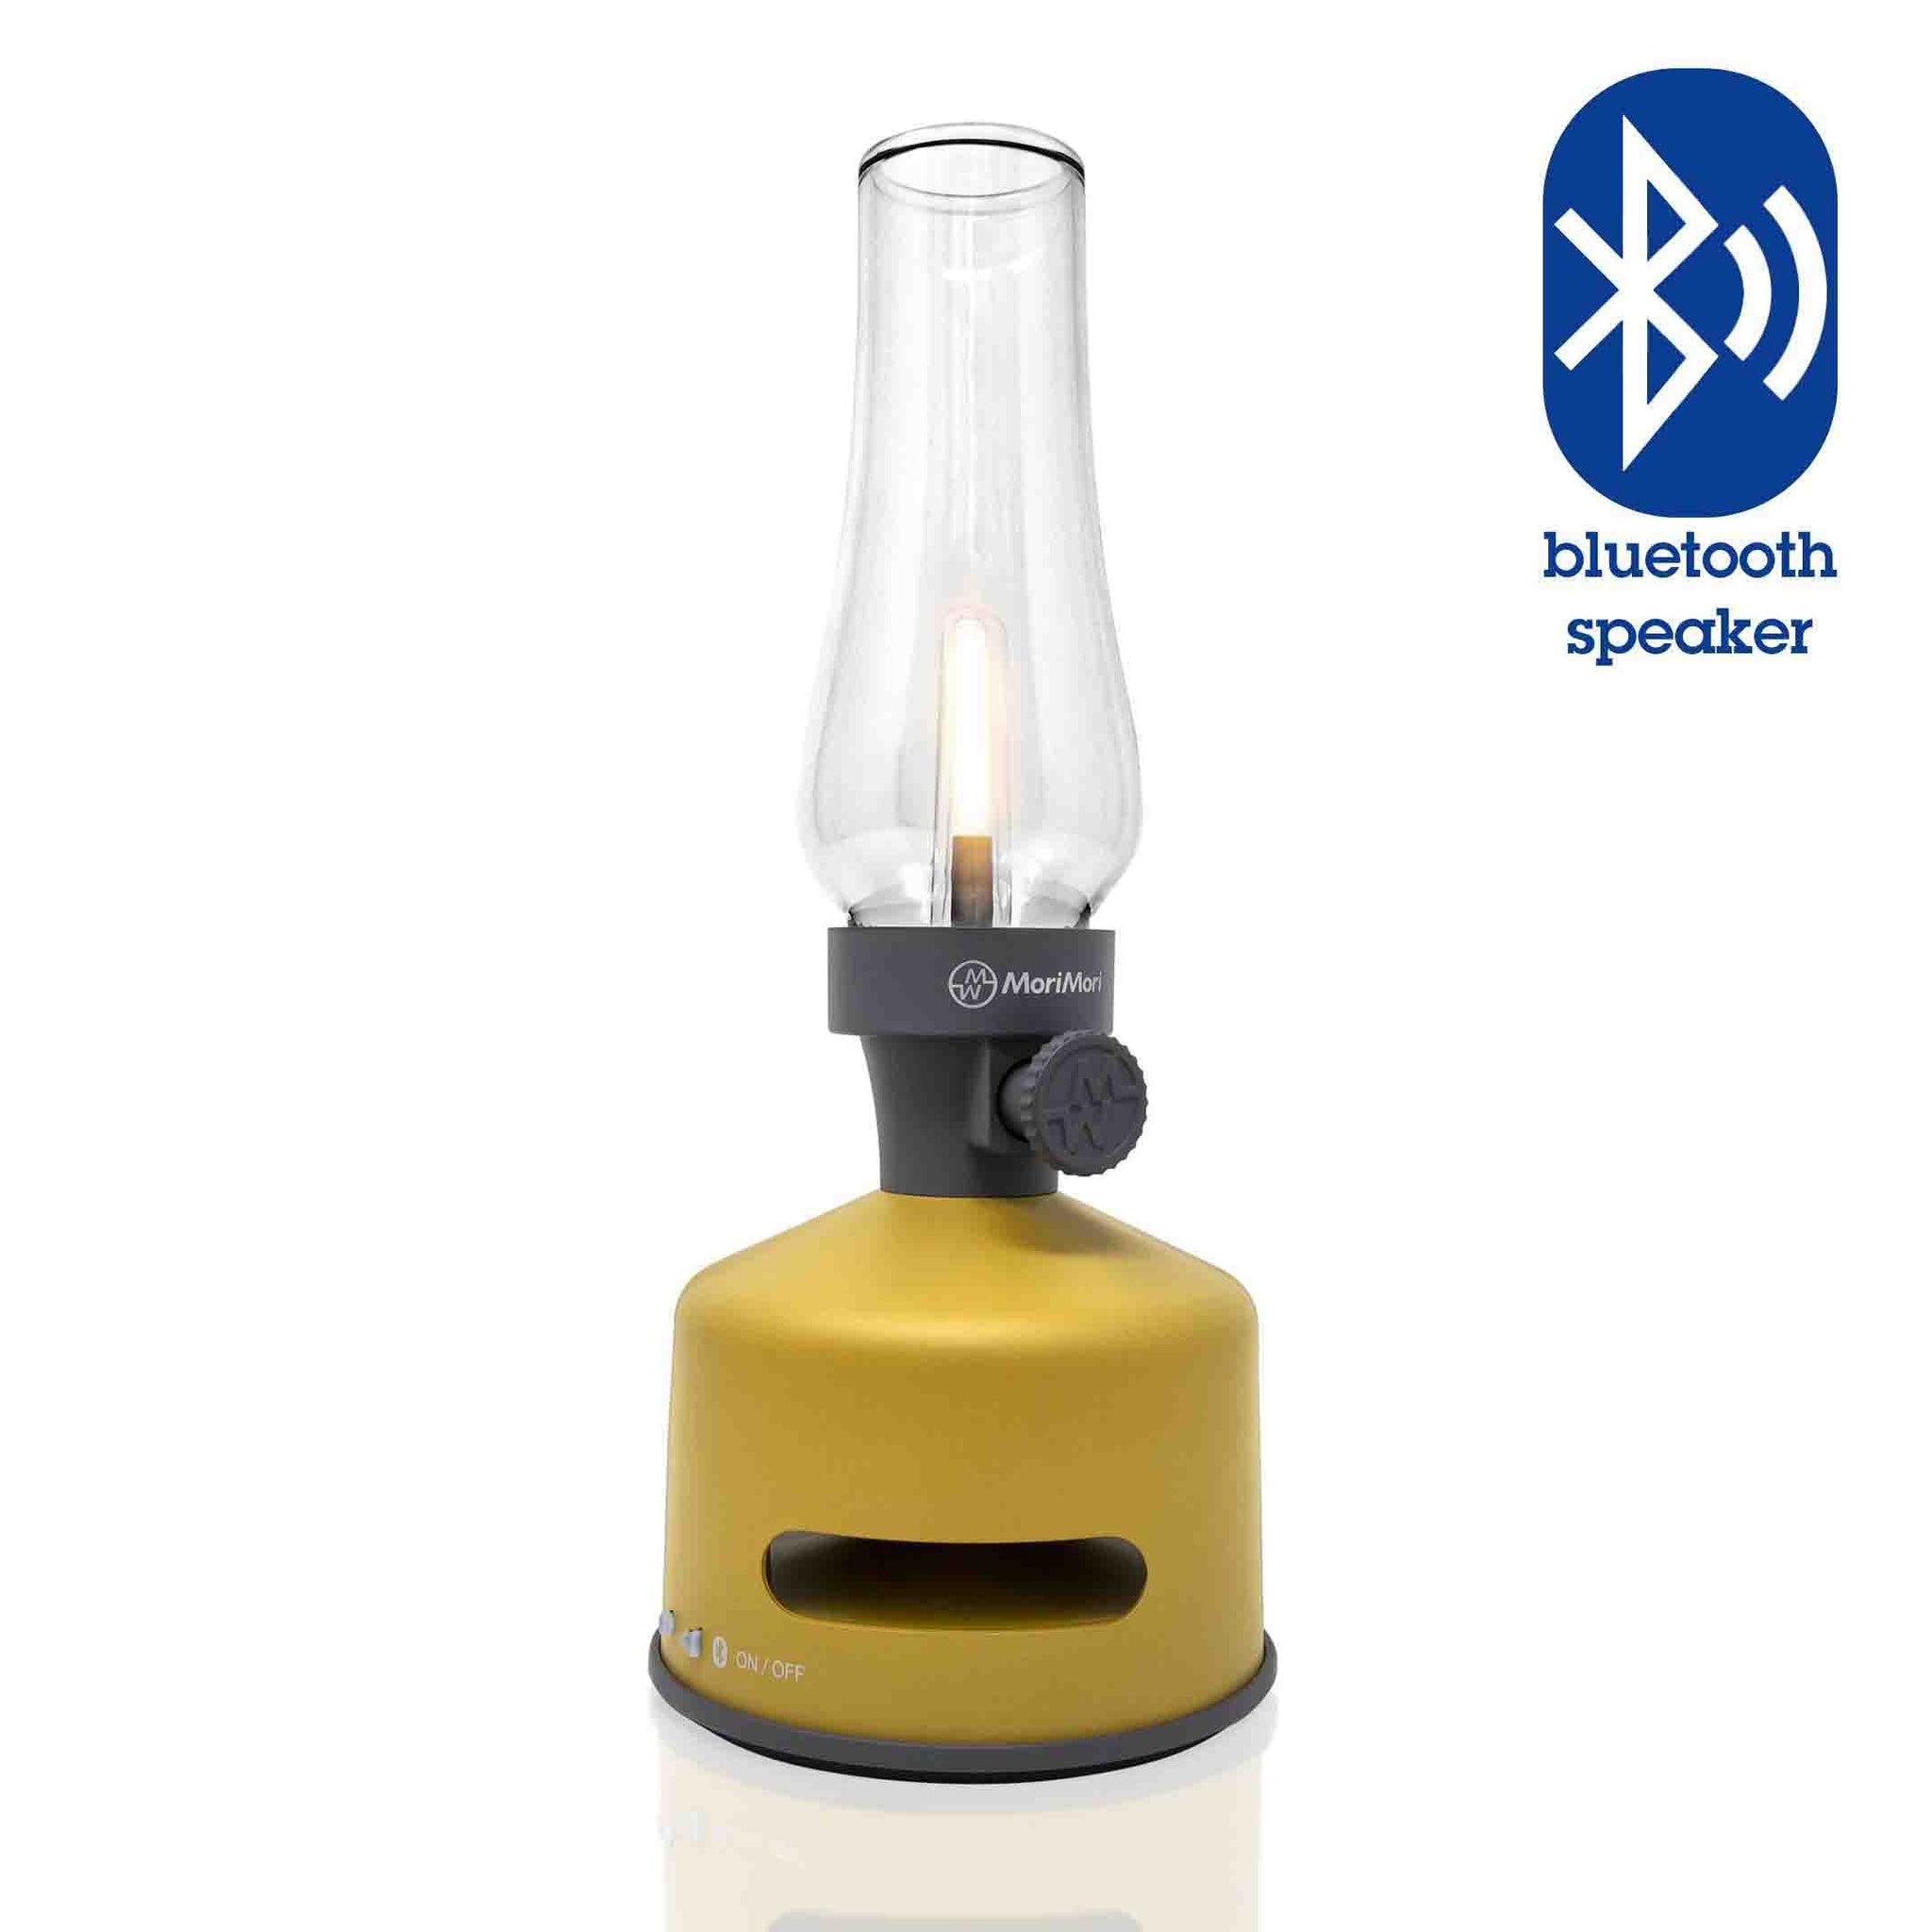 MoriMori LED Lantern & Bluetooth Speaker│Buitenverlichting│art. FLS-2103-YE│voorkant met witte achtergrond en Bluetooth Speaker teken